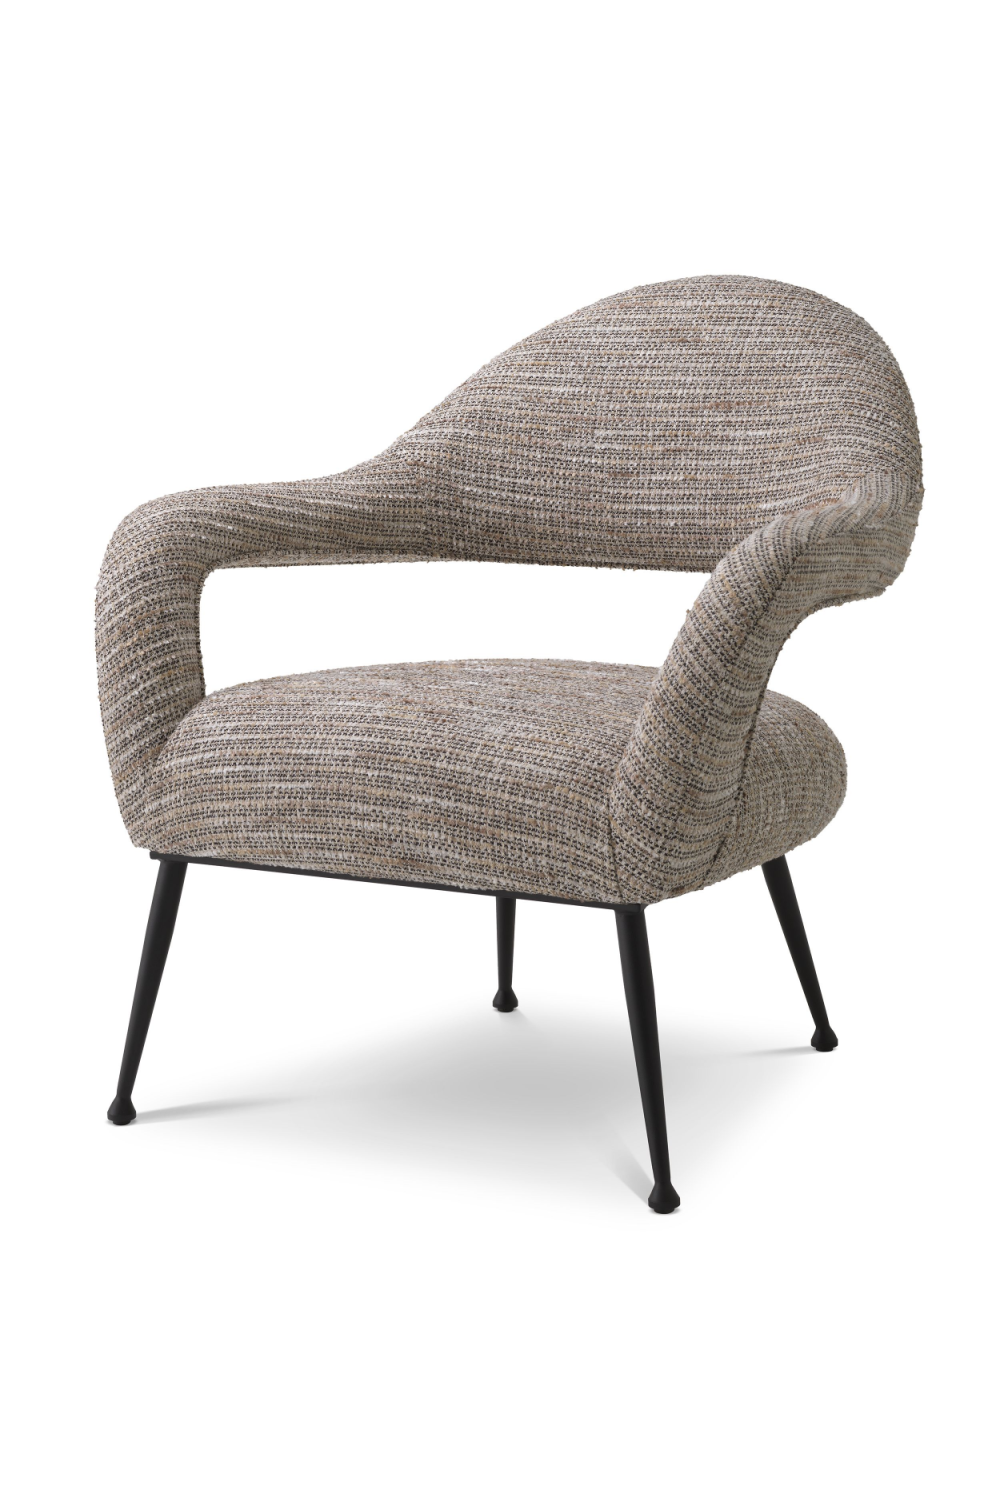 Beige Upholstery Black Leg Accent Chair | Eichholtz Lombardi | Oroa.com